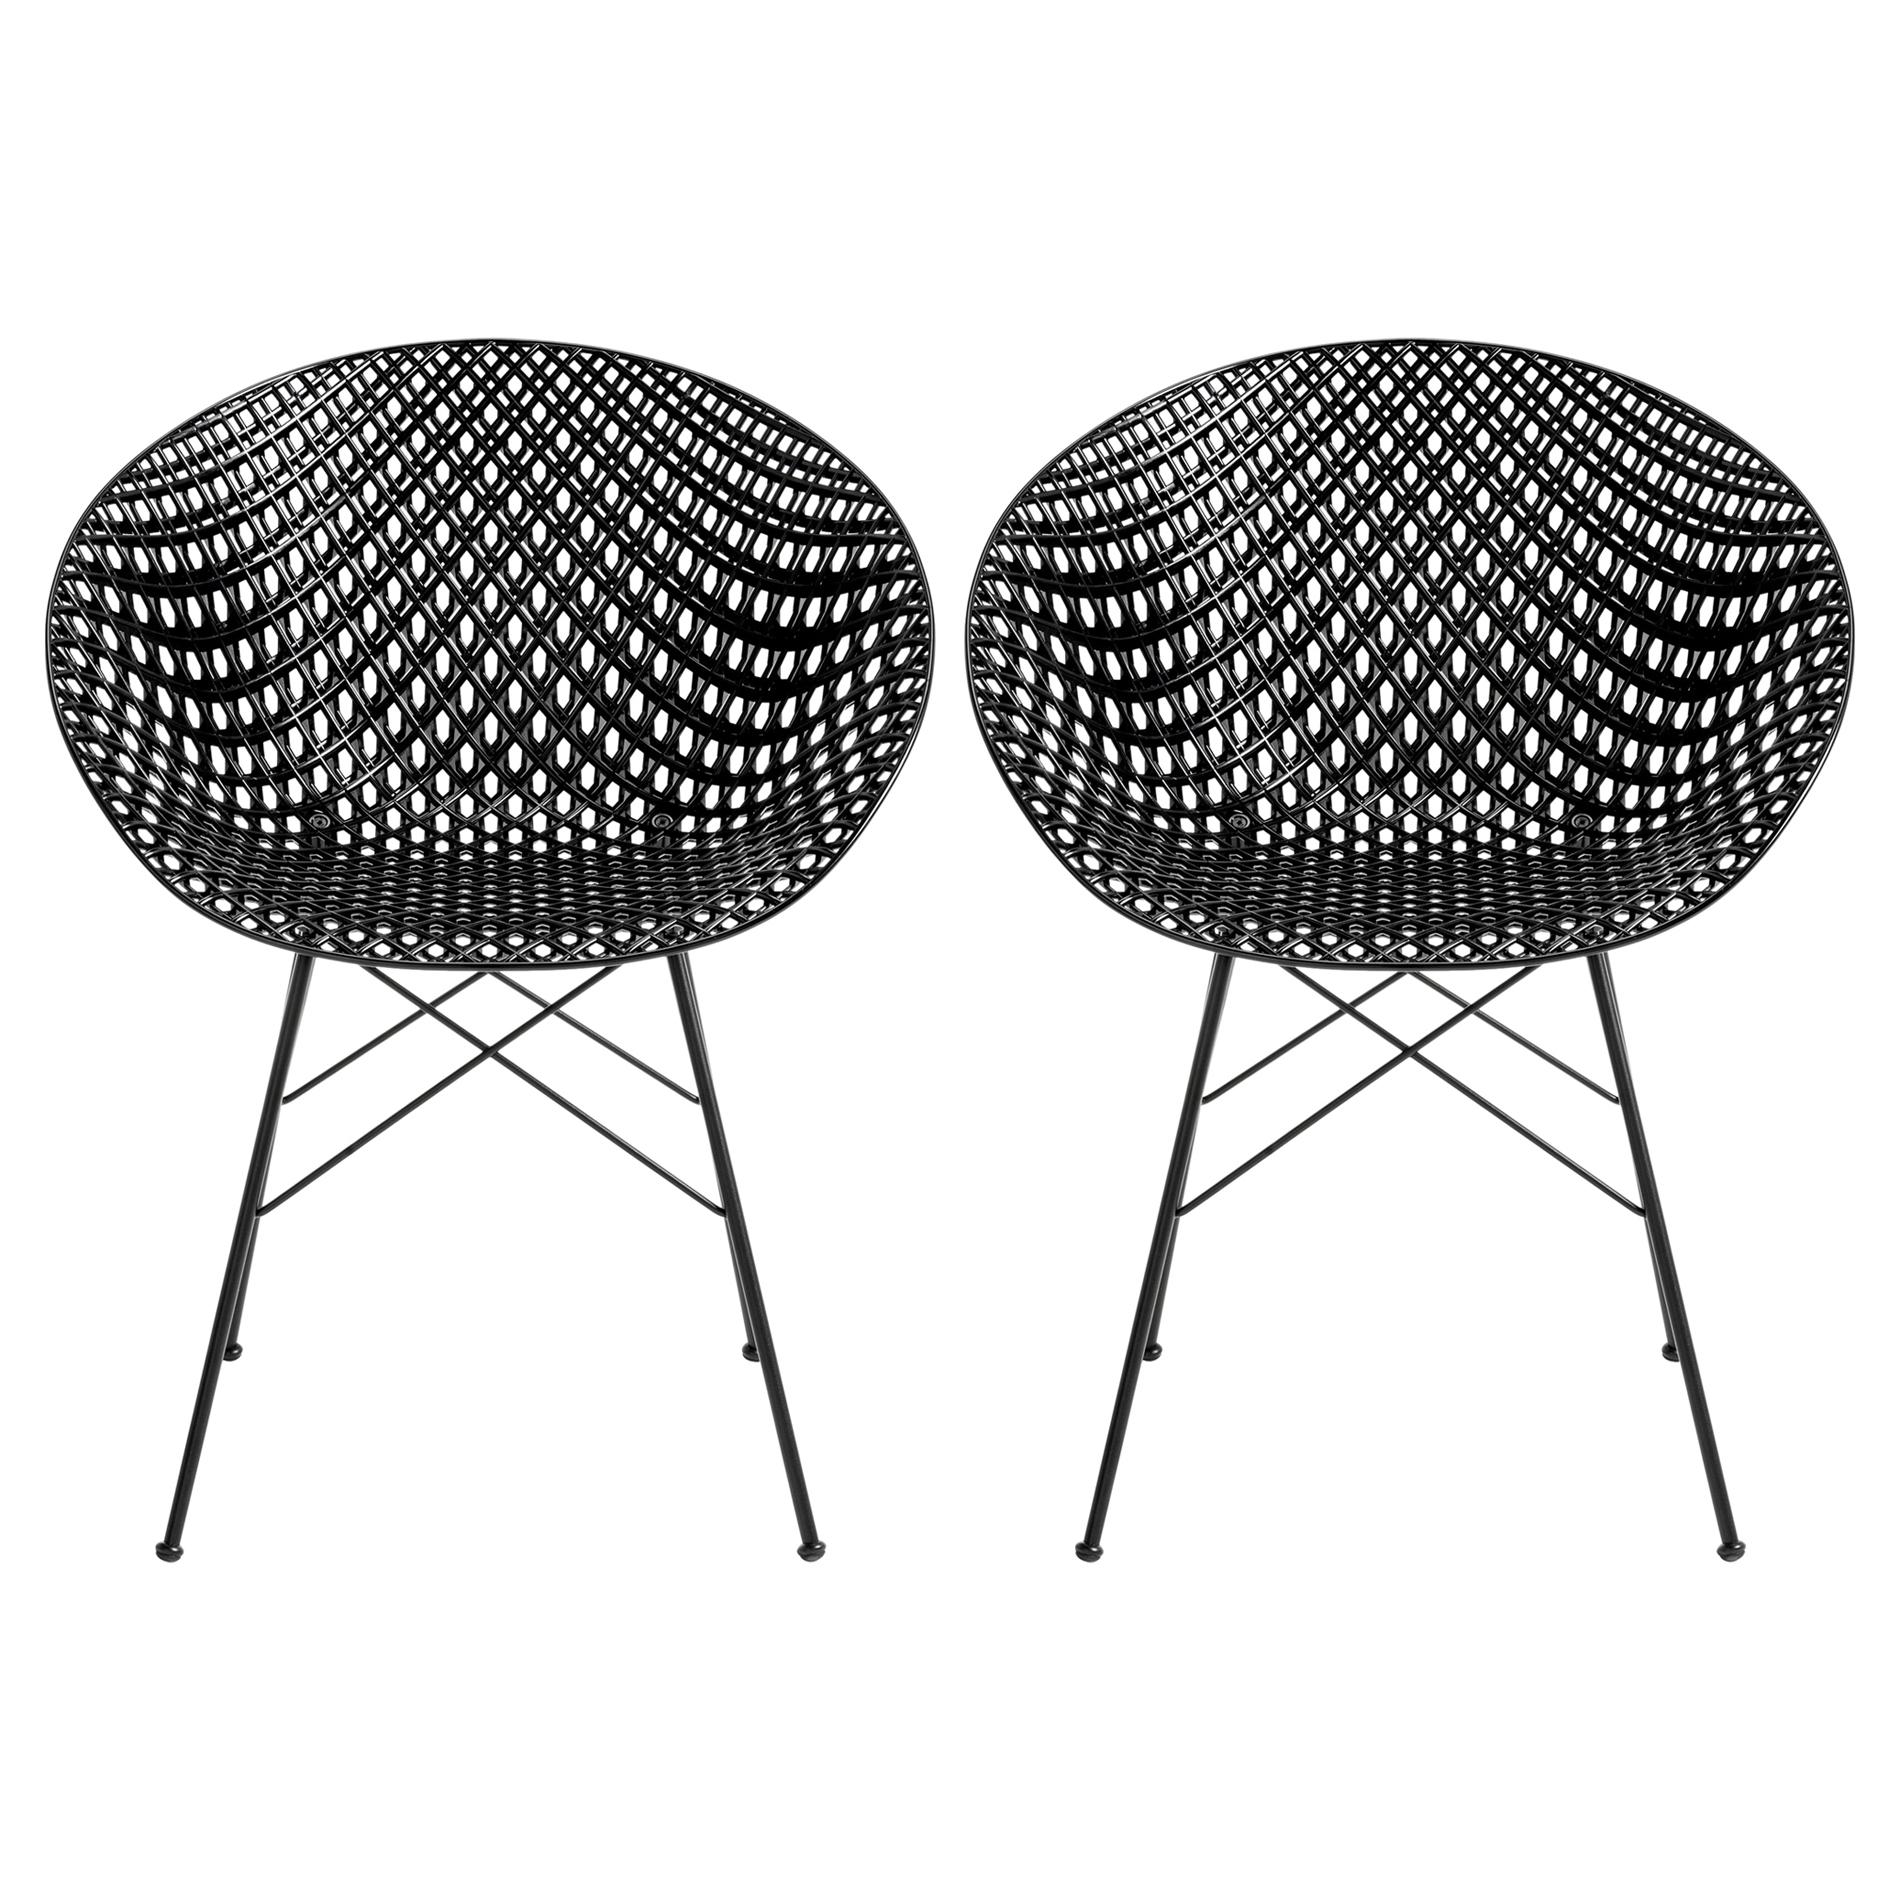 Set of 2 Kartell Smatrik Outdoor Chair in Black by Tokujin Yoshioka